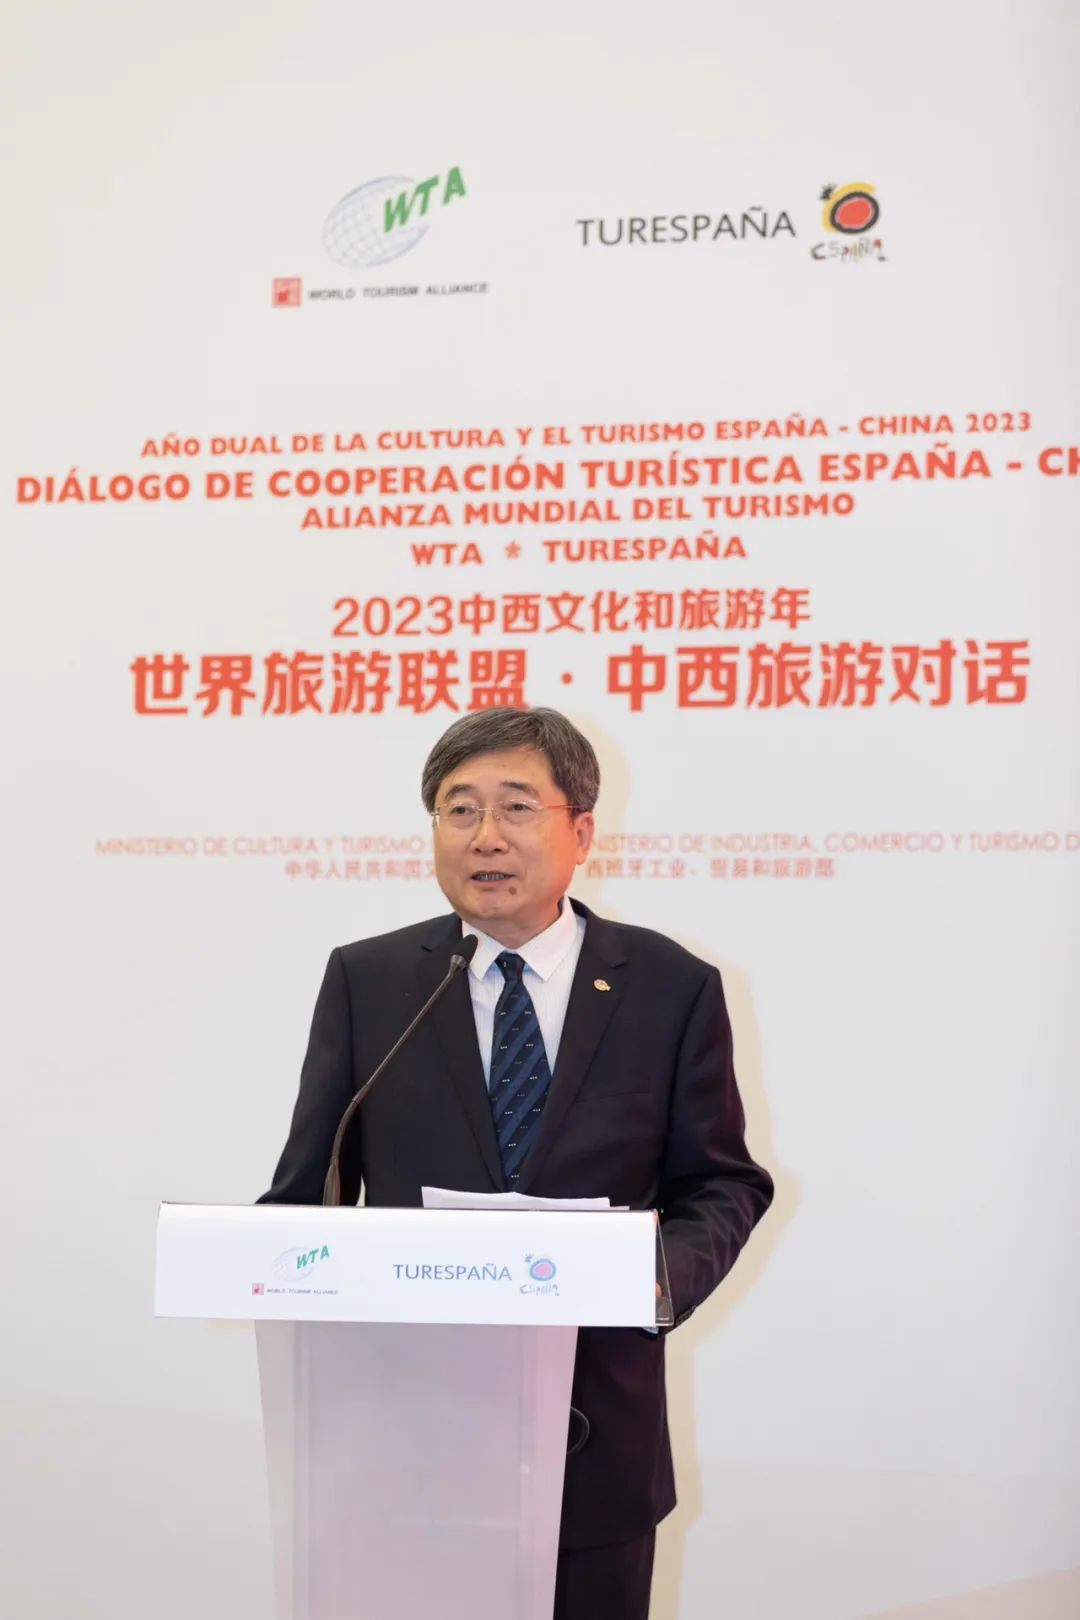 ZHANG Xu, Chair of the World Tourism Alliance